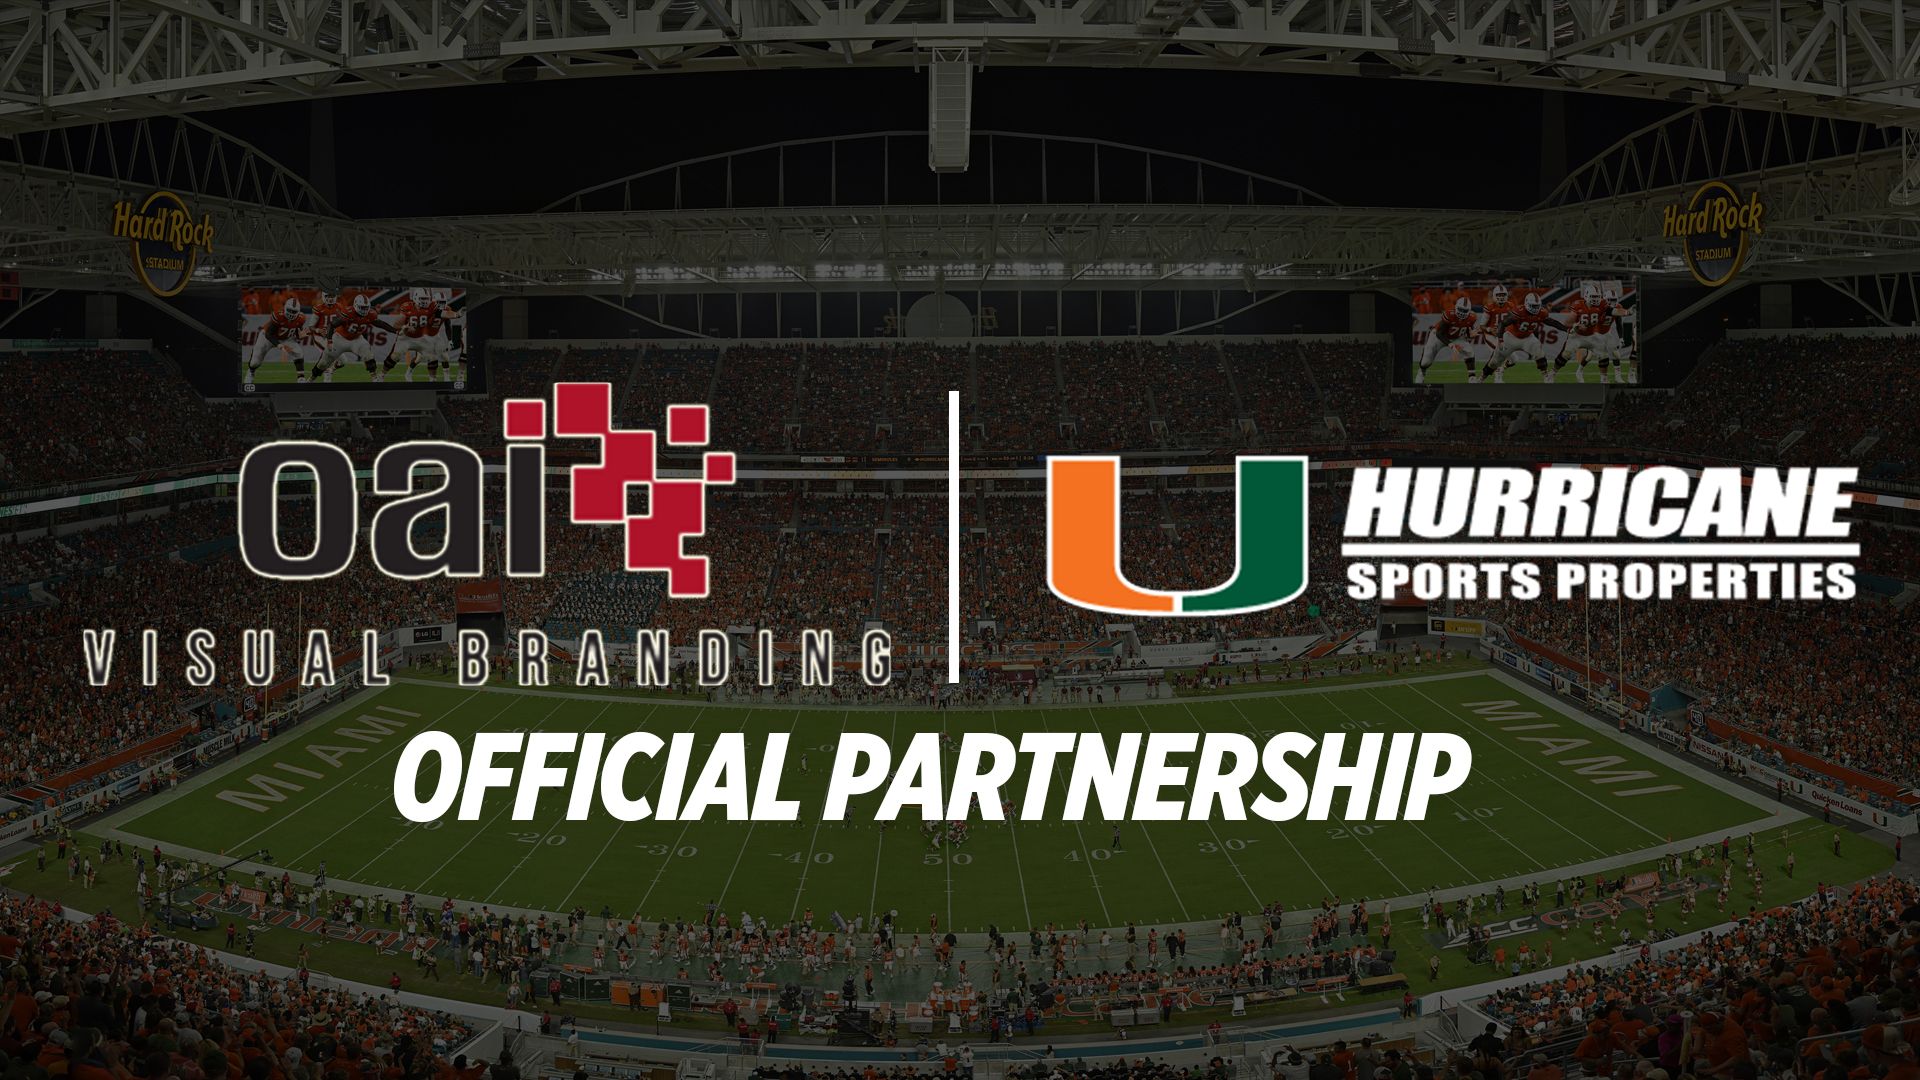 Miami Athletics Announces Two-Year Partnership With OAI Visual Branding